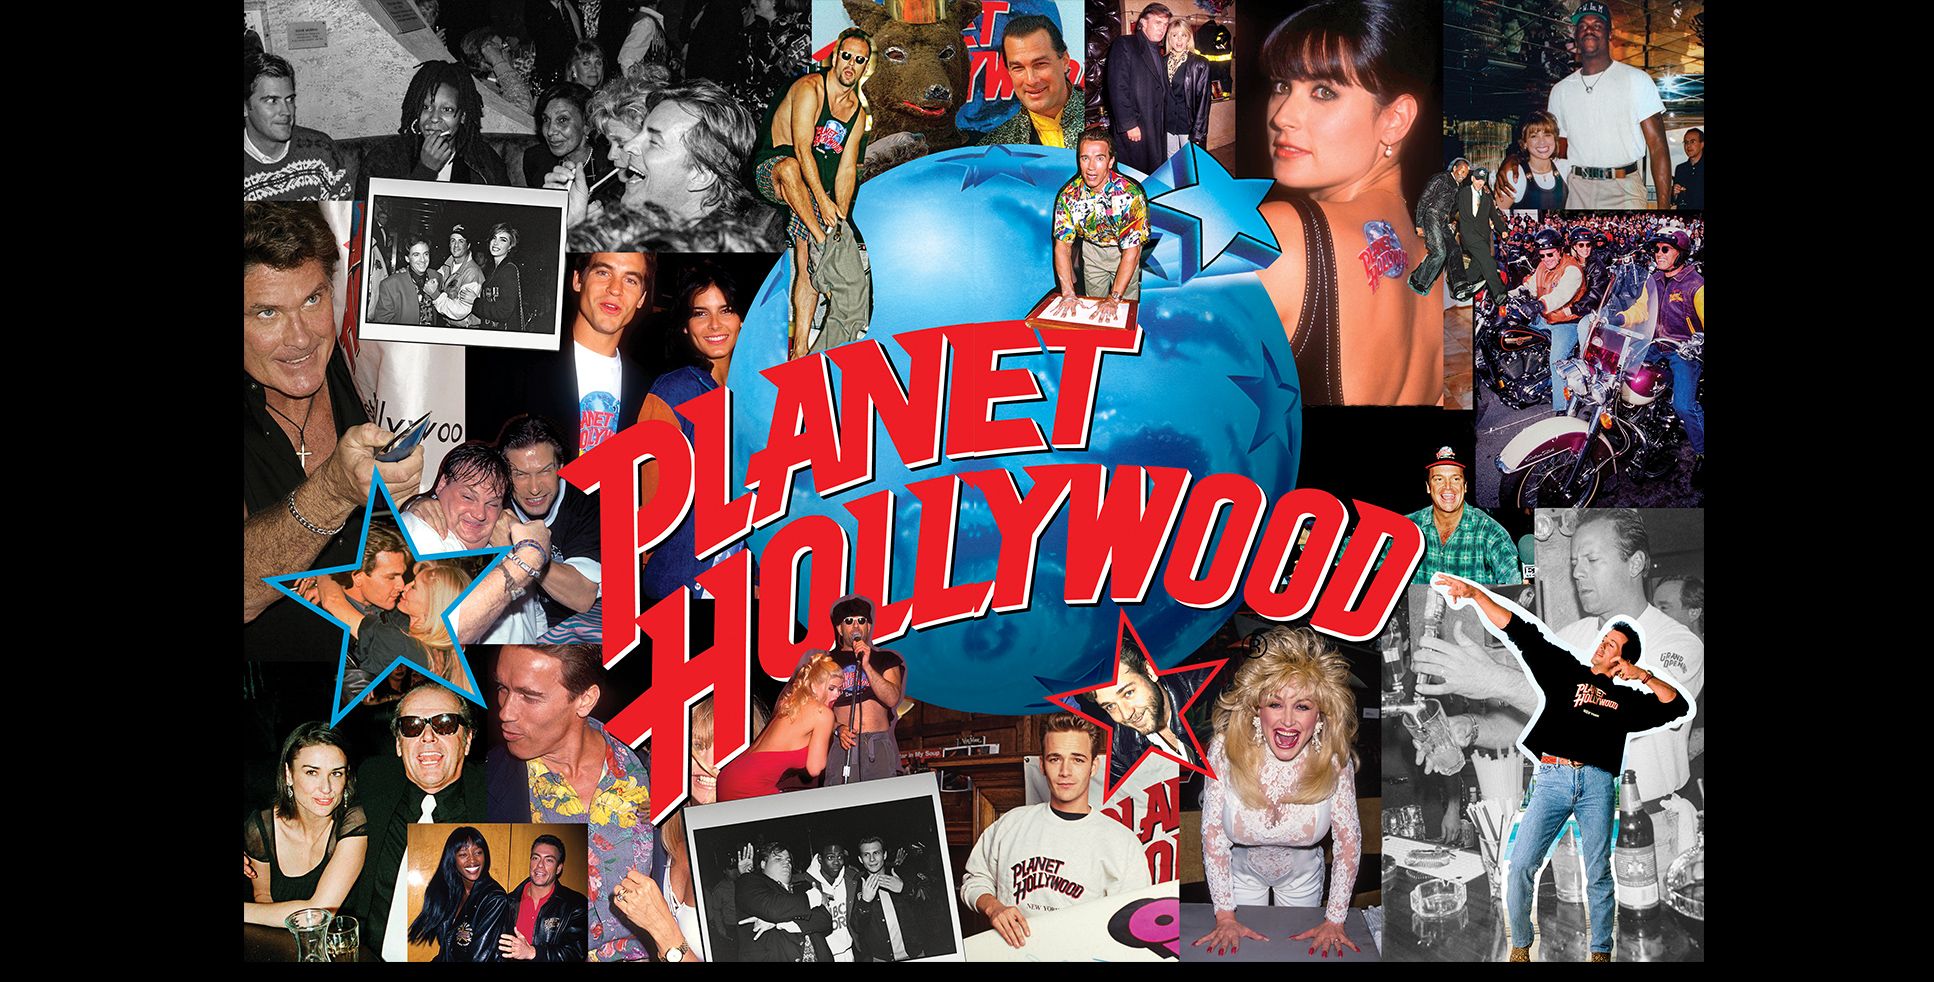 Planet Hollywood Origin Story